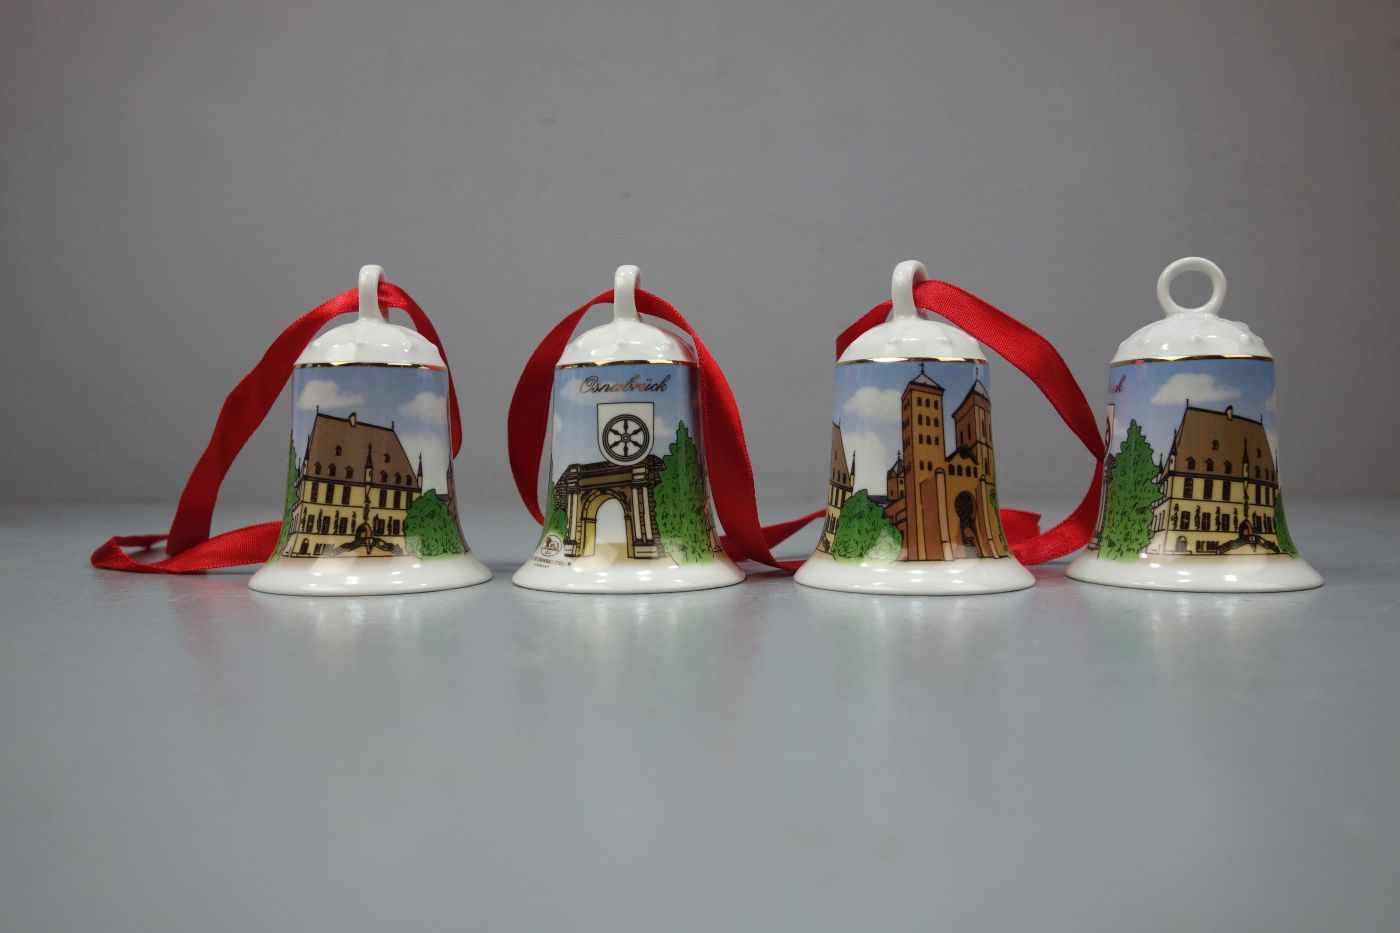 PORZELLANGLOCKEN "OSNABRÜCK" / porcelain bells, 4 Stück, Hutschenreuther Porzellanmanufaktur. - Image 2 of 3